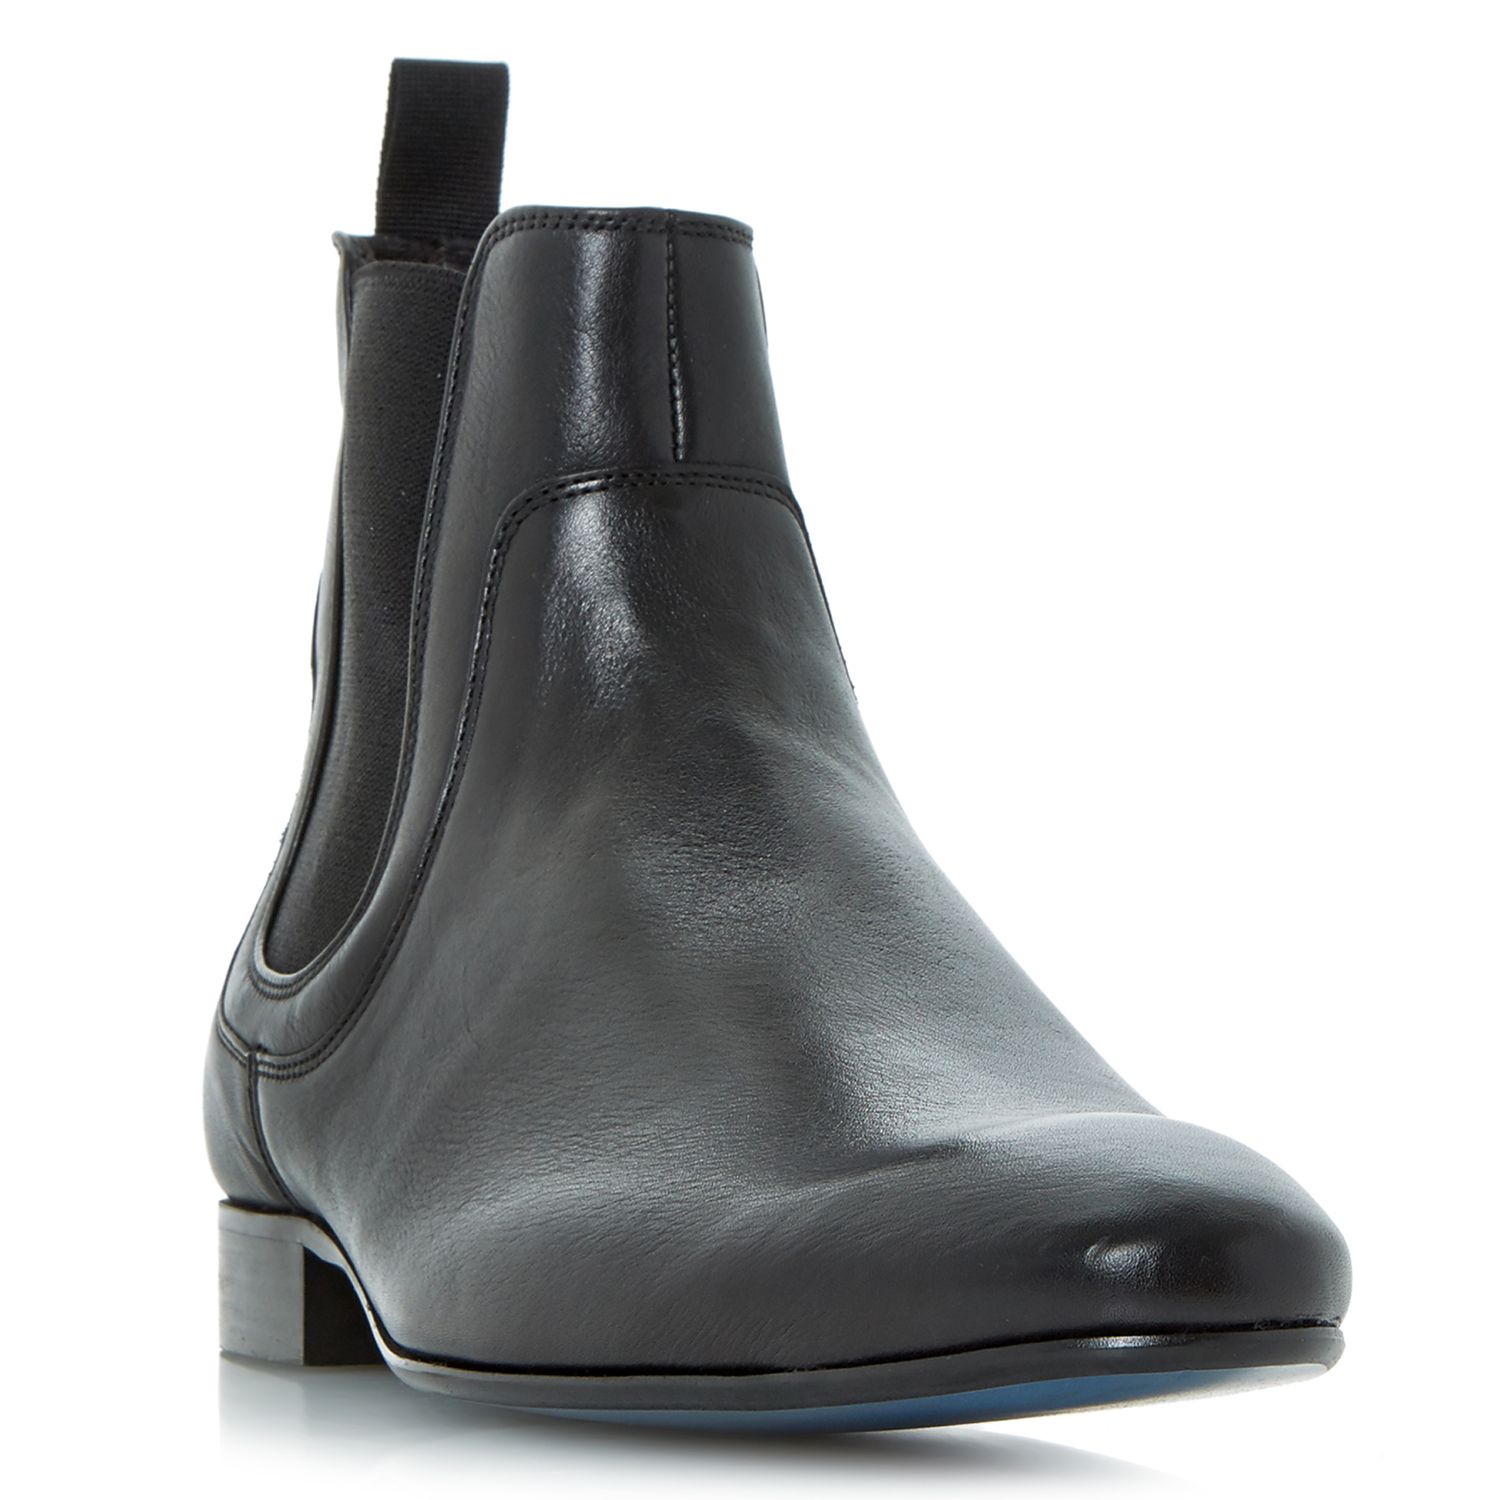 Bertie Maple Leather Chelsea Boots, Black, 10